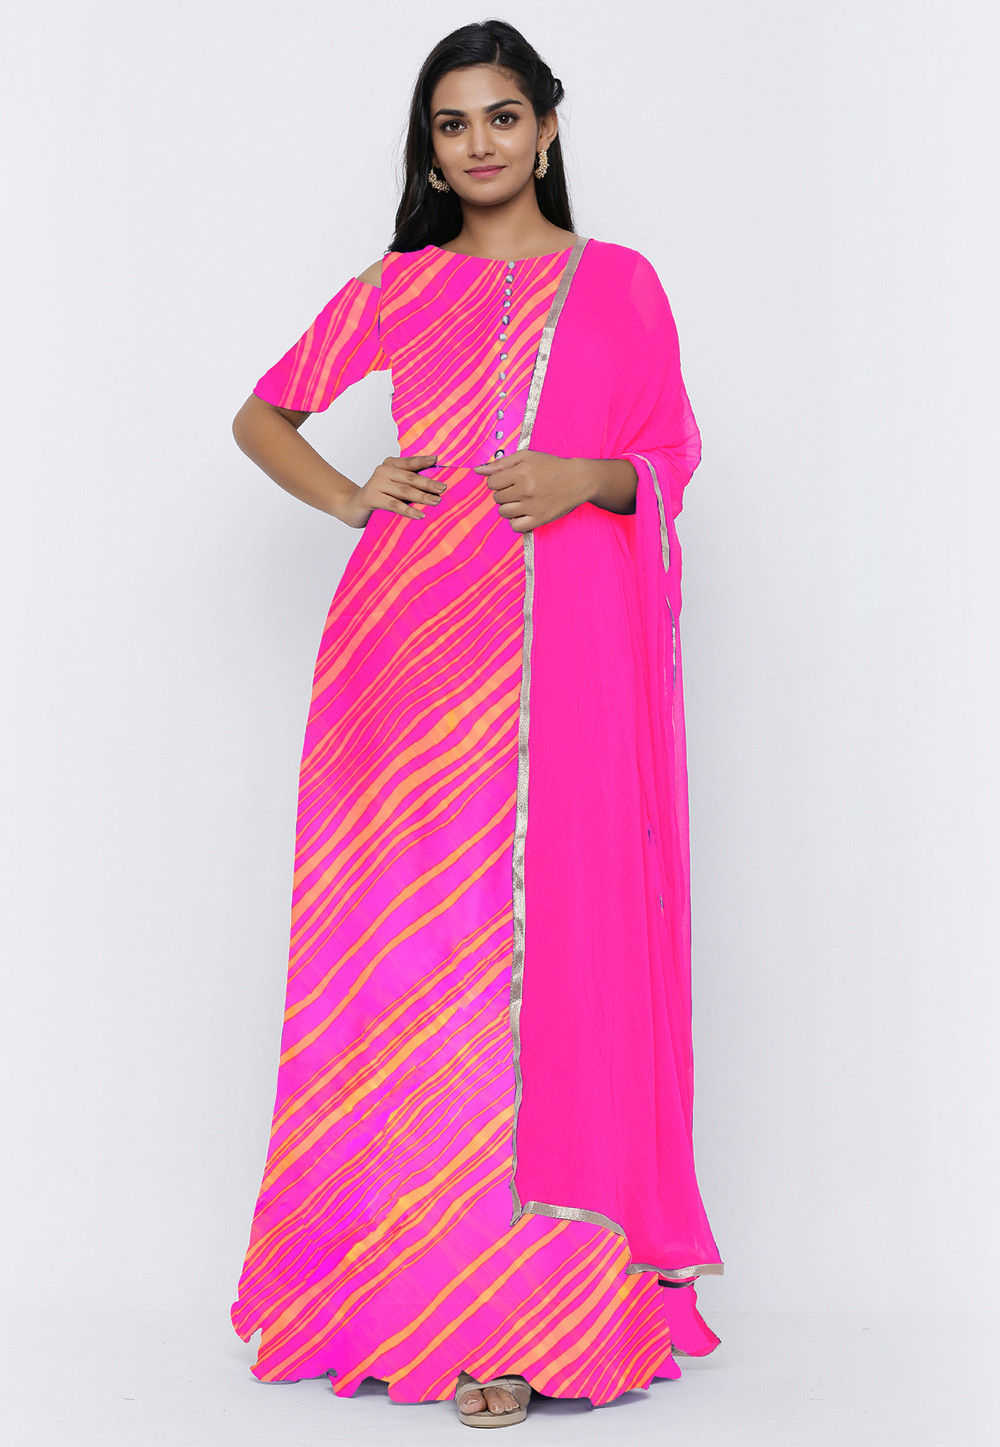 Buy Moktika Women Cotton Lehriya Printed Straight Kurti | Kurta Neon Pink  (Medium) at Amazon.in